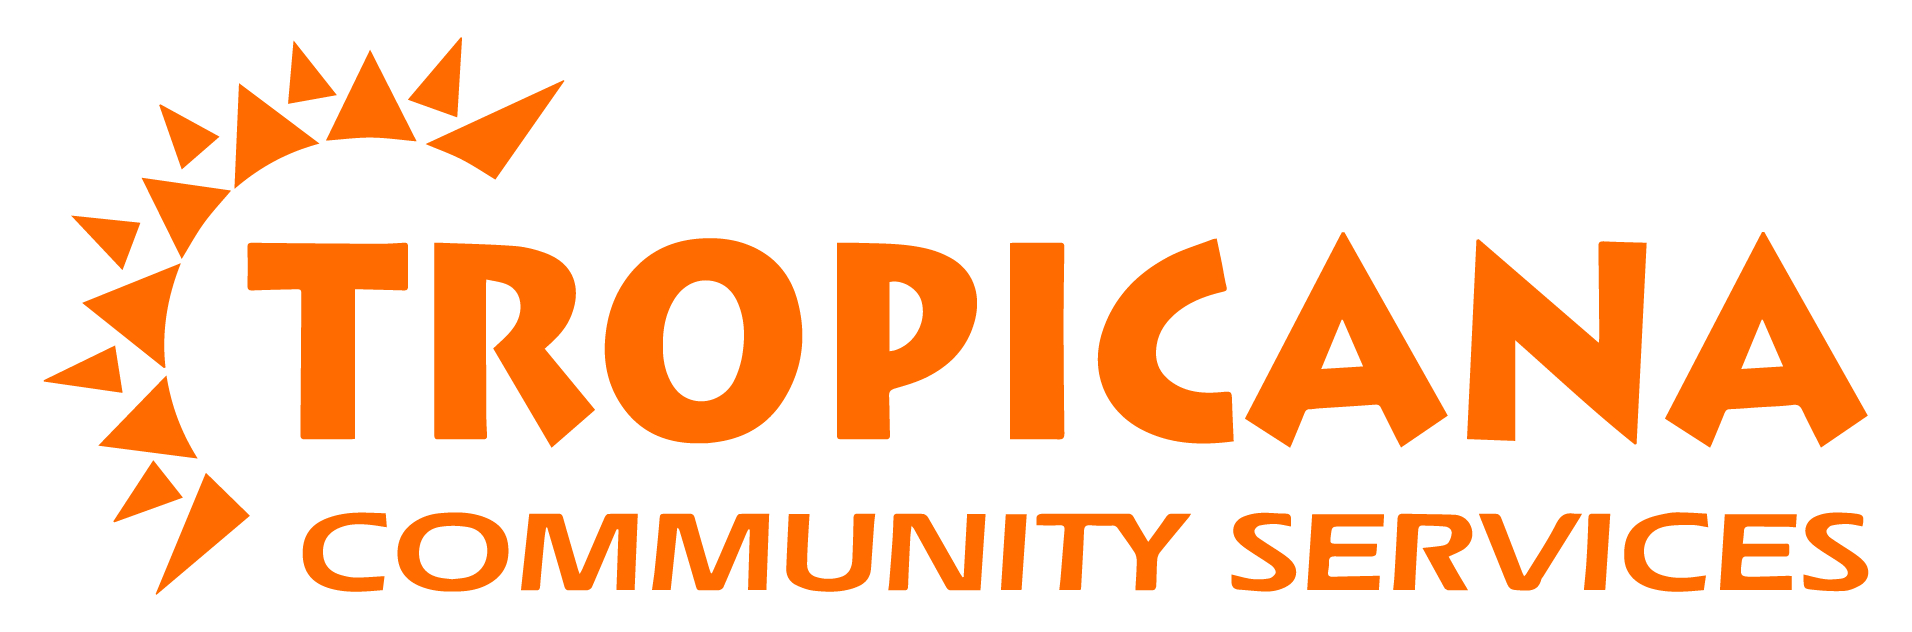 TROPICANA COMMUNITY SERVICES logo